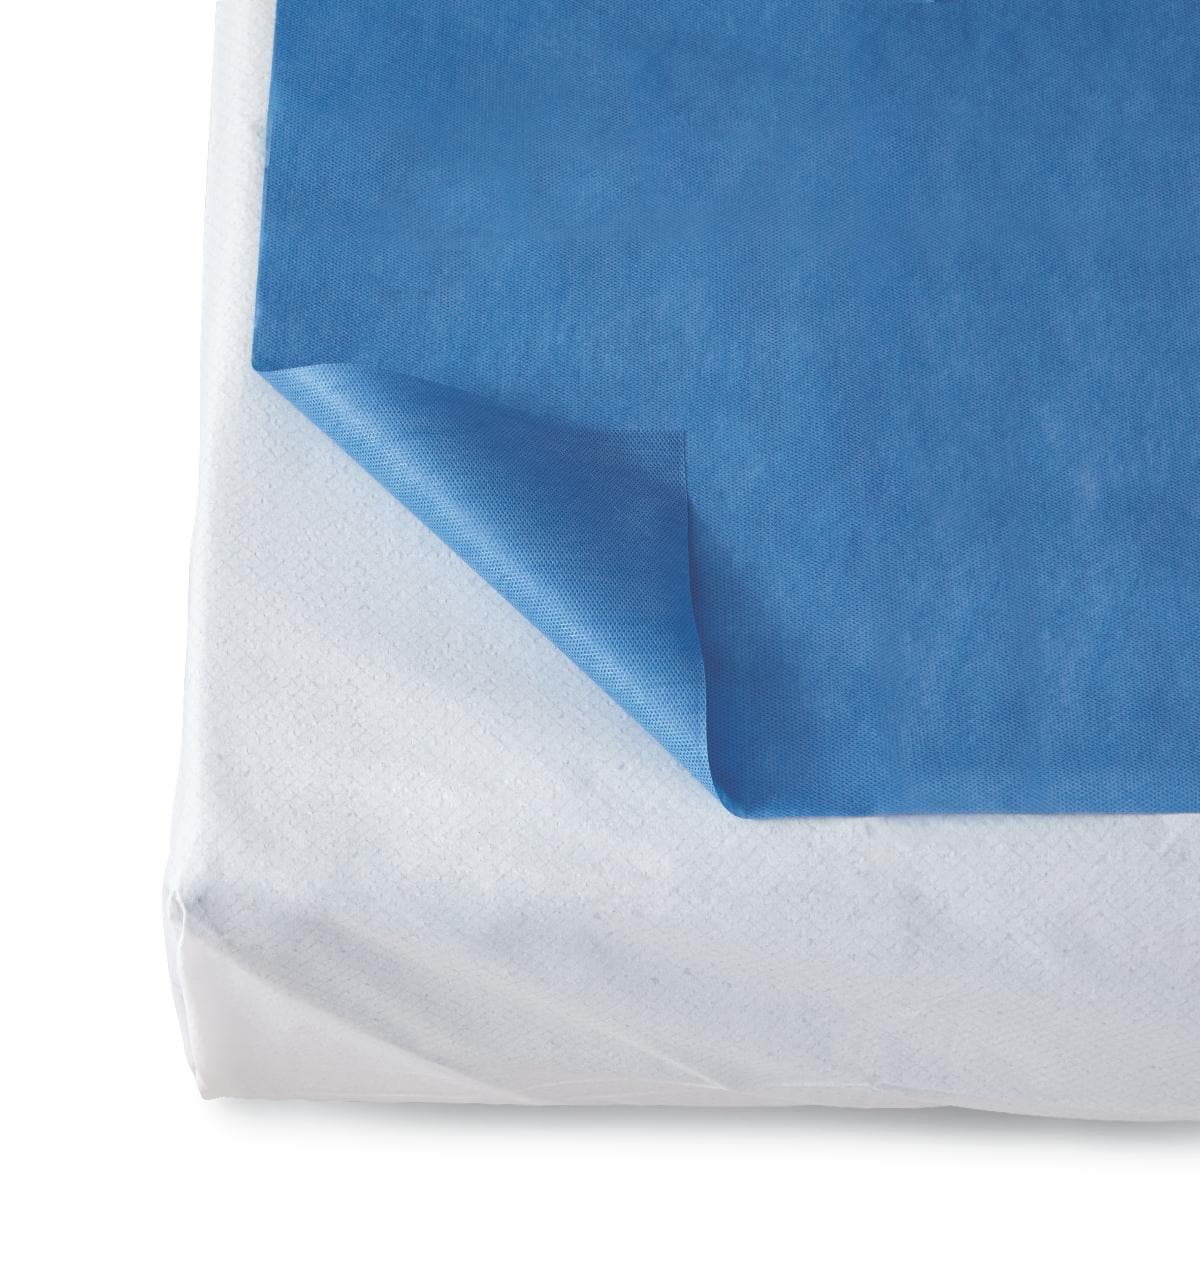 Medline  Disposable SMS Flat Bed Sheets - Dark Blue 40" x 84" - Senior.com 